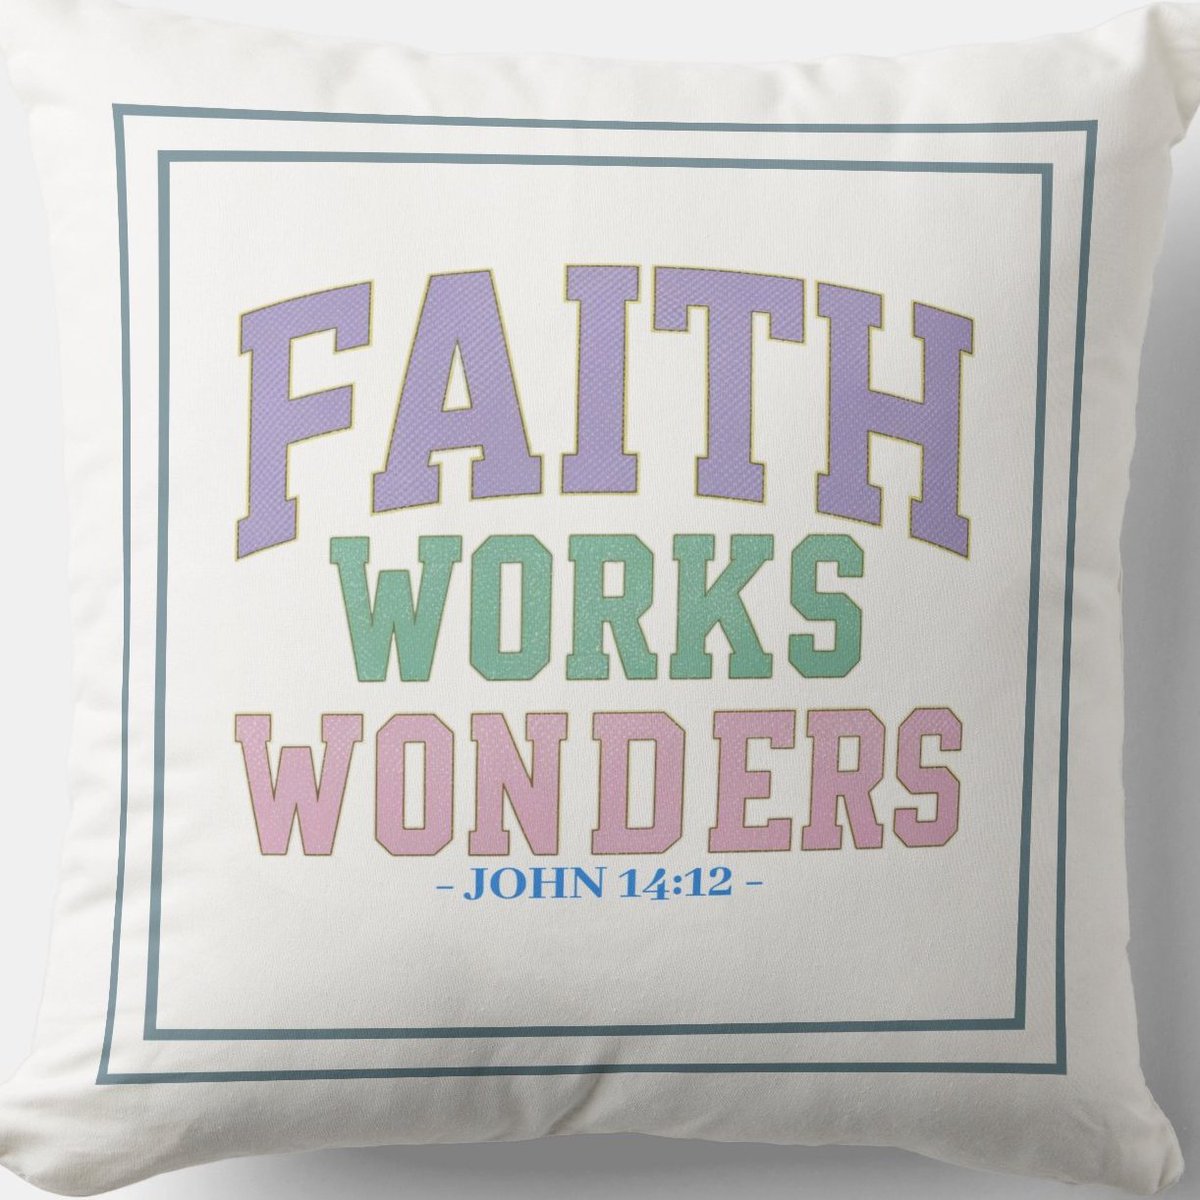 Faith Works Wonders #Cushion zazzle.com/faith_works_wo… Unlocking #Miracles #Pillow #Blessing #JesusChrist #JesusSaves #Jesus #christian #spiritual #Homedecoration #uniquegift #giftideas #prayers #giftformom #giftidea #HolySpirit #pillows #giftshop #giftsforher #giftsformom #faith